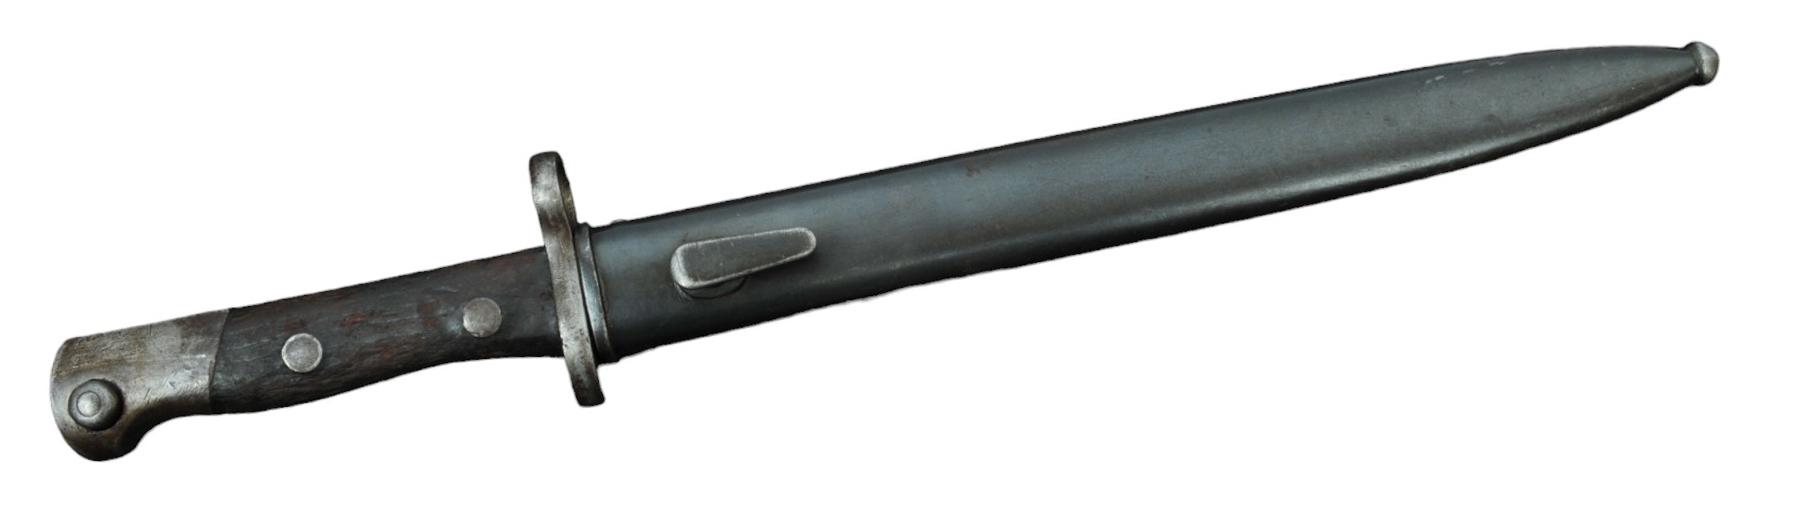 Rare Siamese Military WWII Mauser Rifle Bayonet (A)